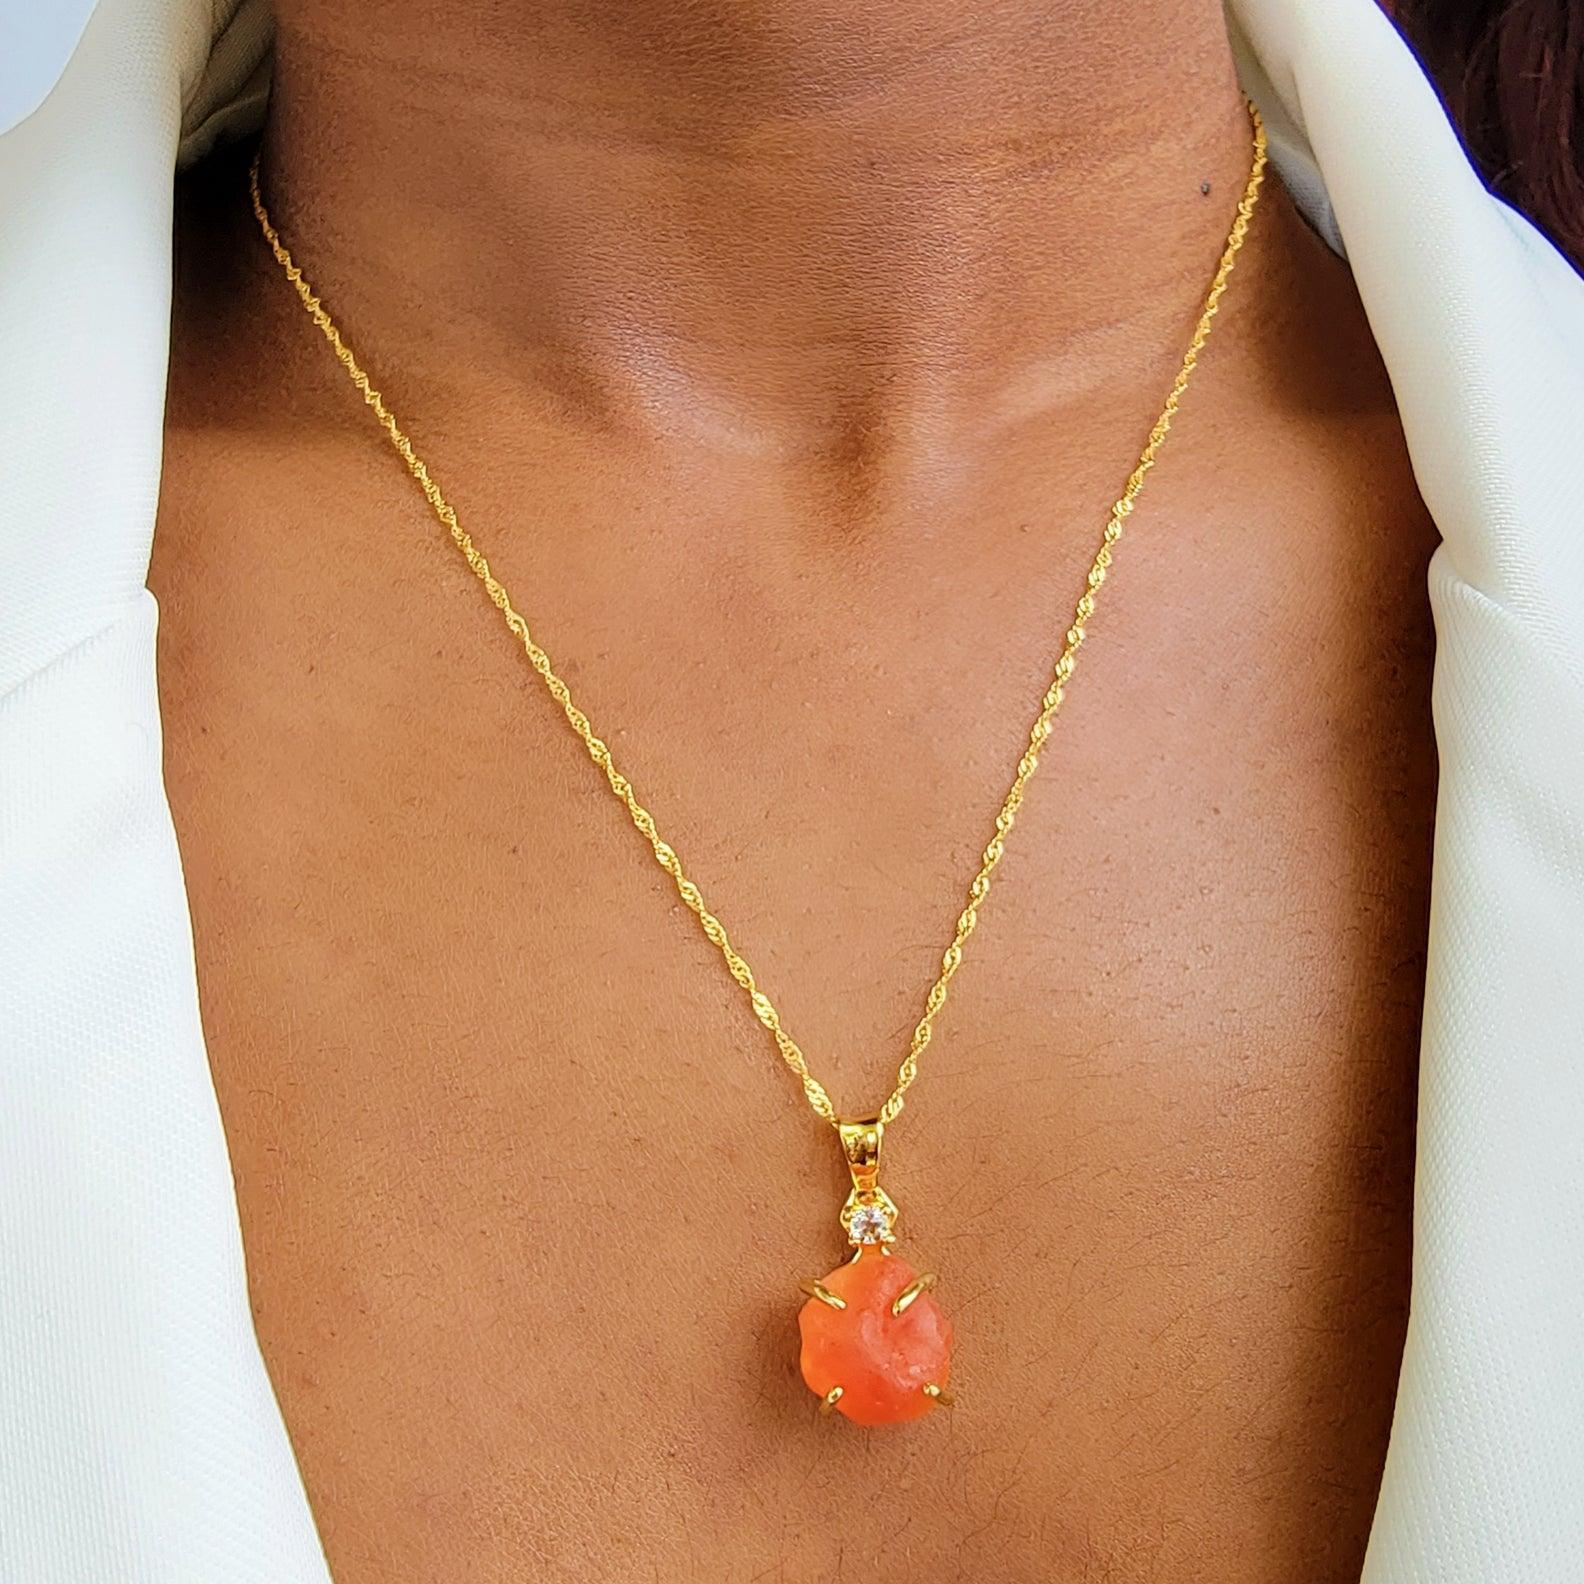 Gold Princess Necklace w Rosebud Pendant & Orange Crystal Accent | eBay